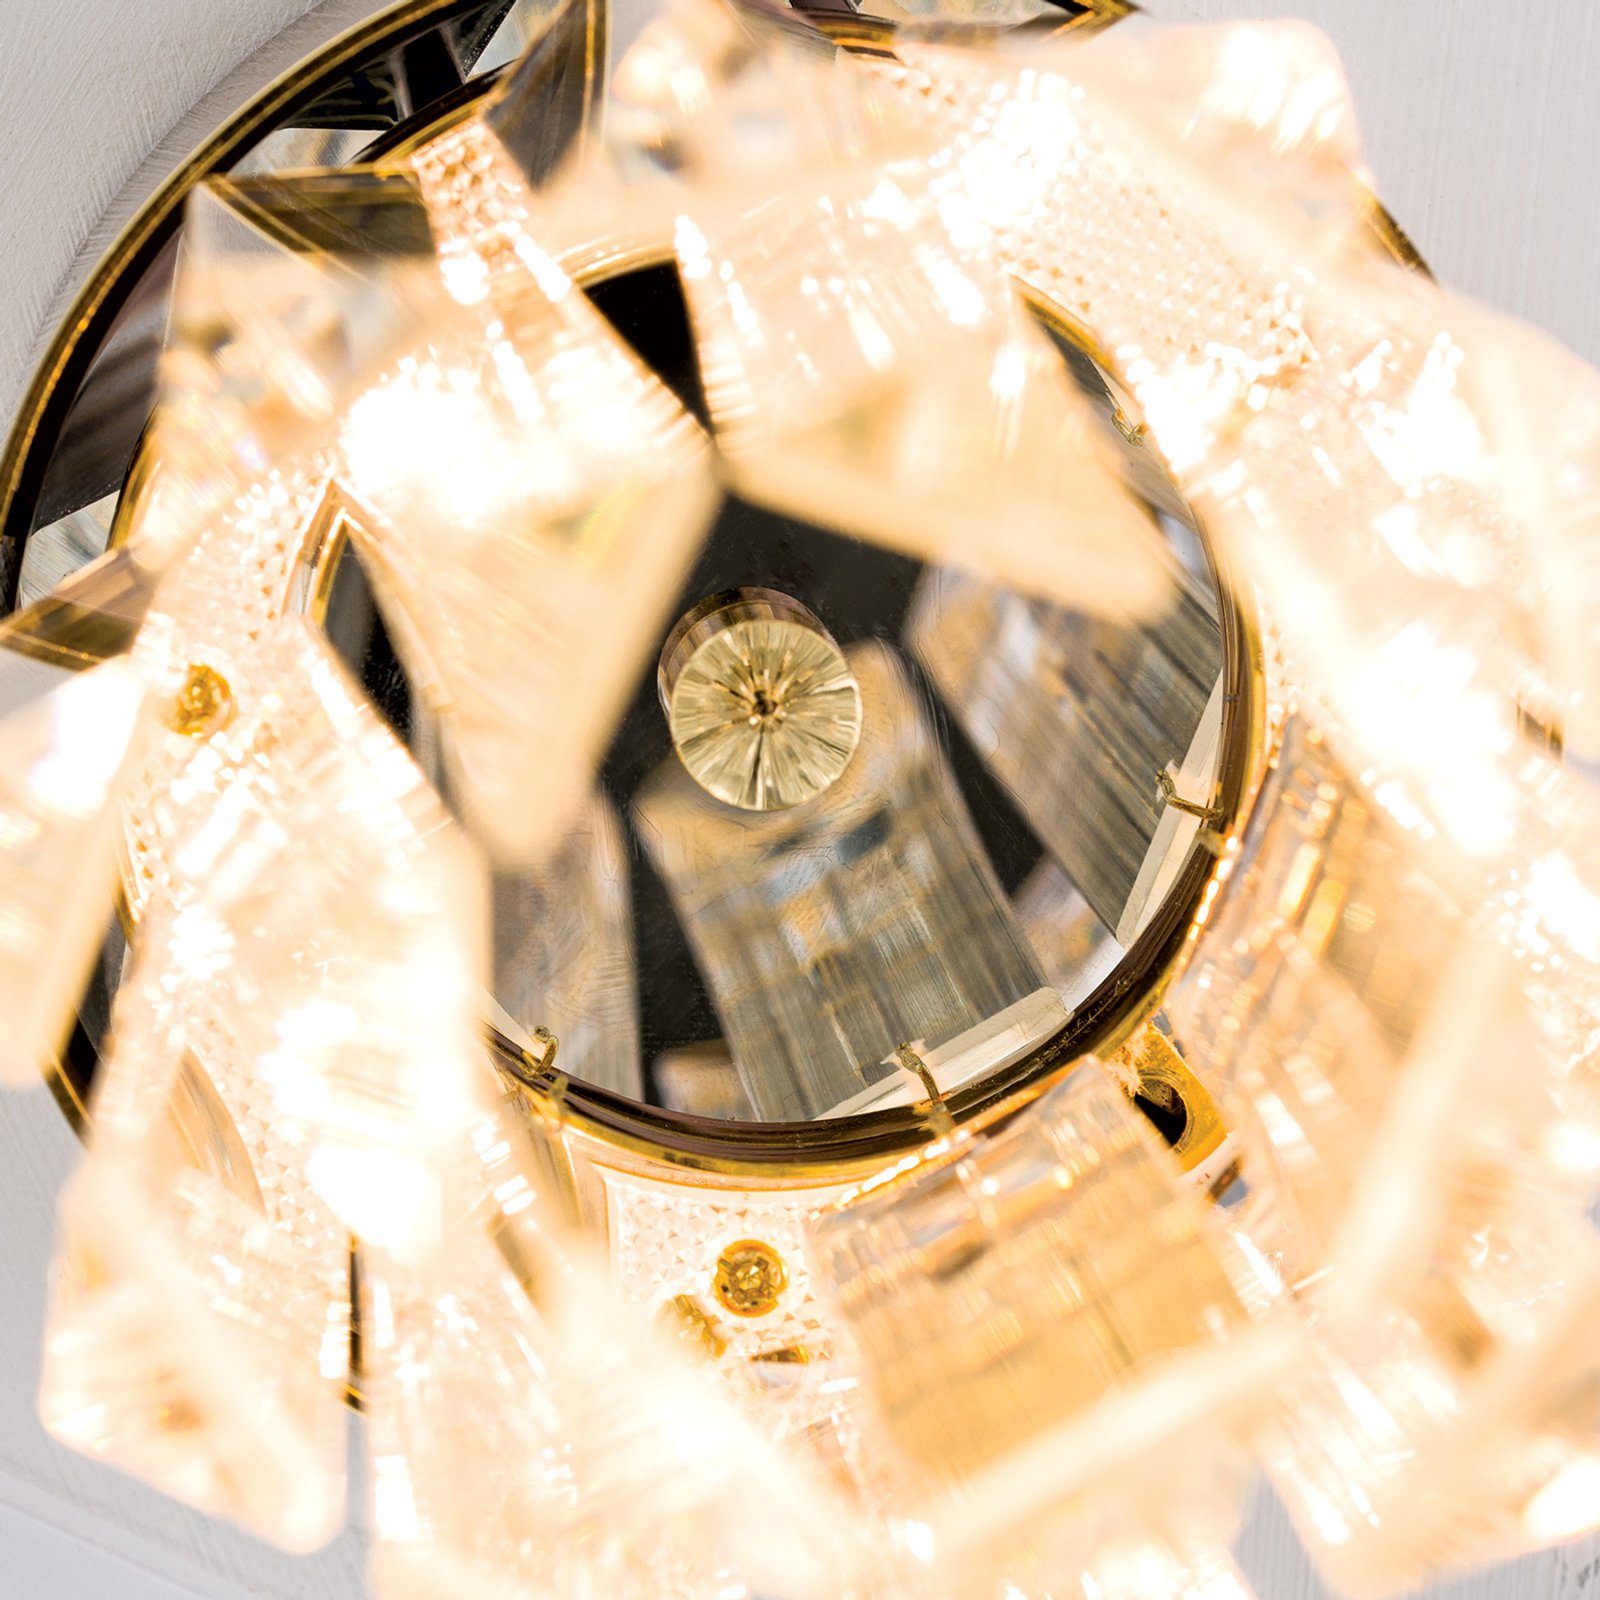 LED plafondlamp Prism, kristalglas, Ø10cm, goud